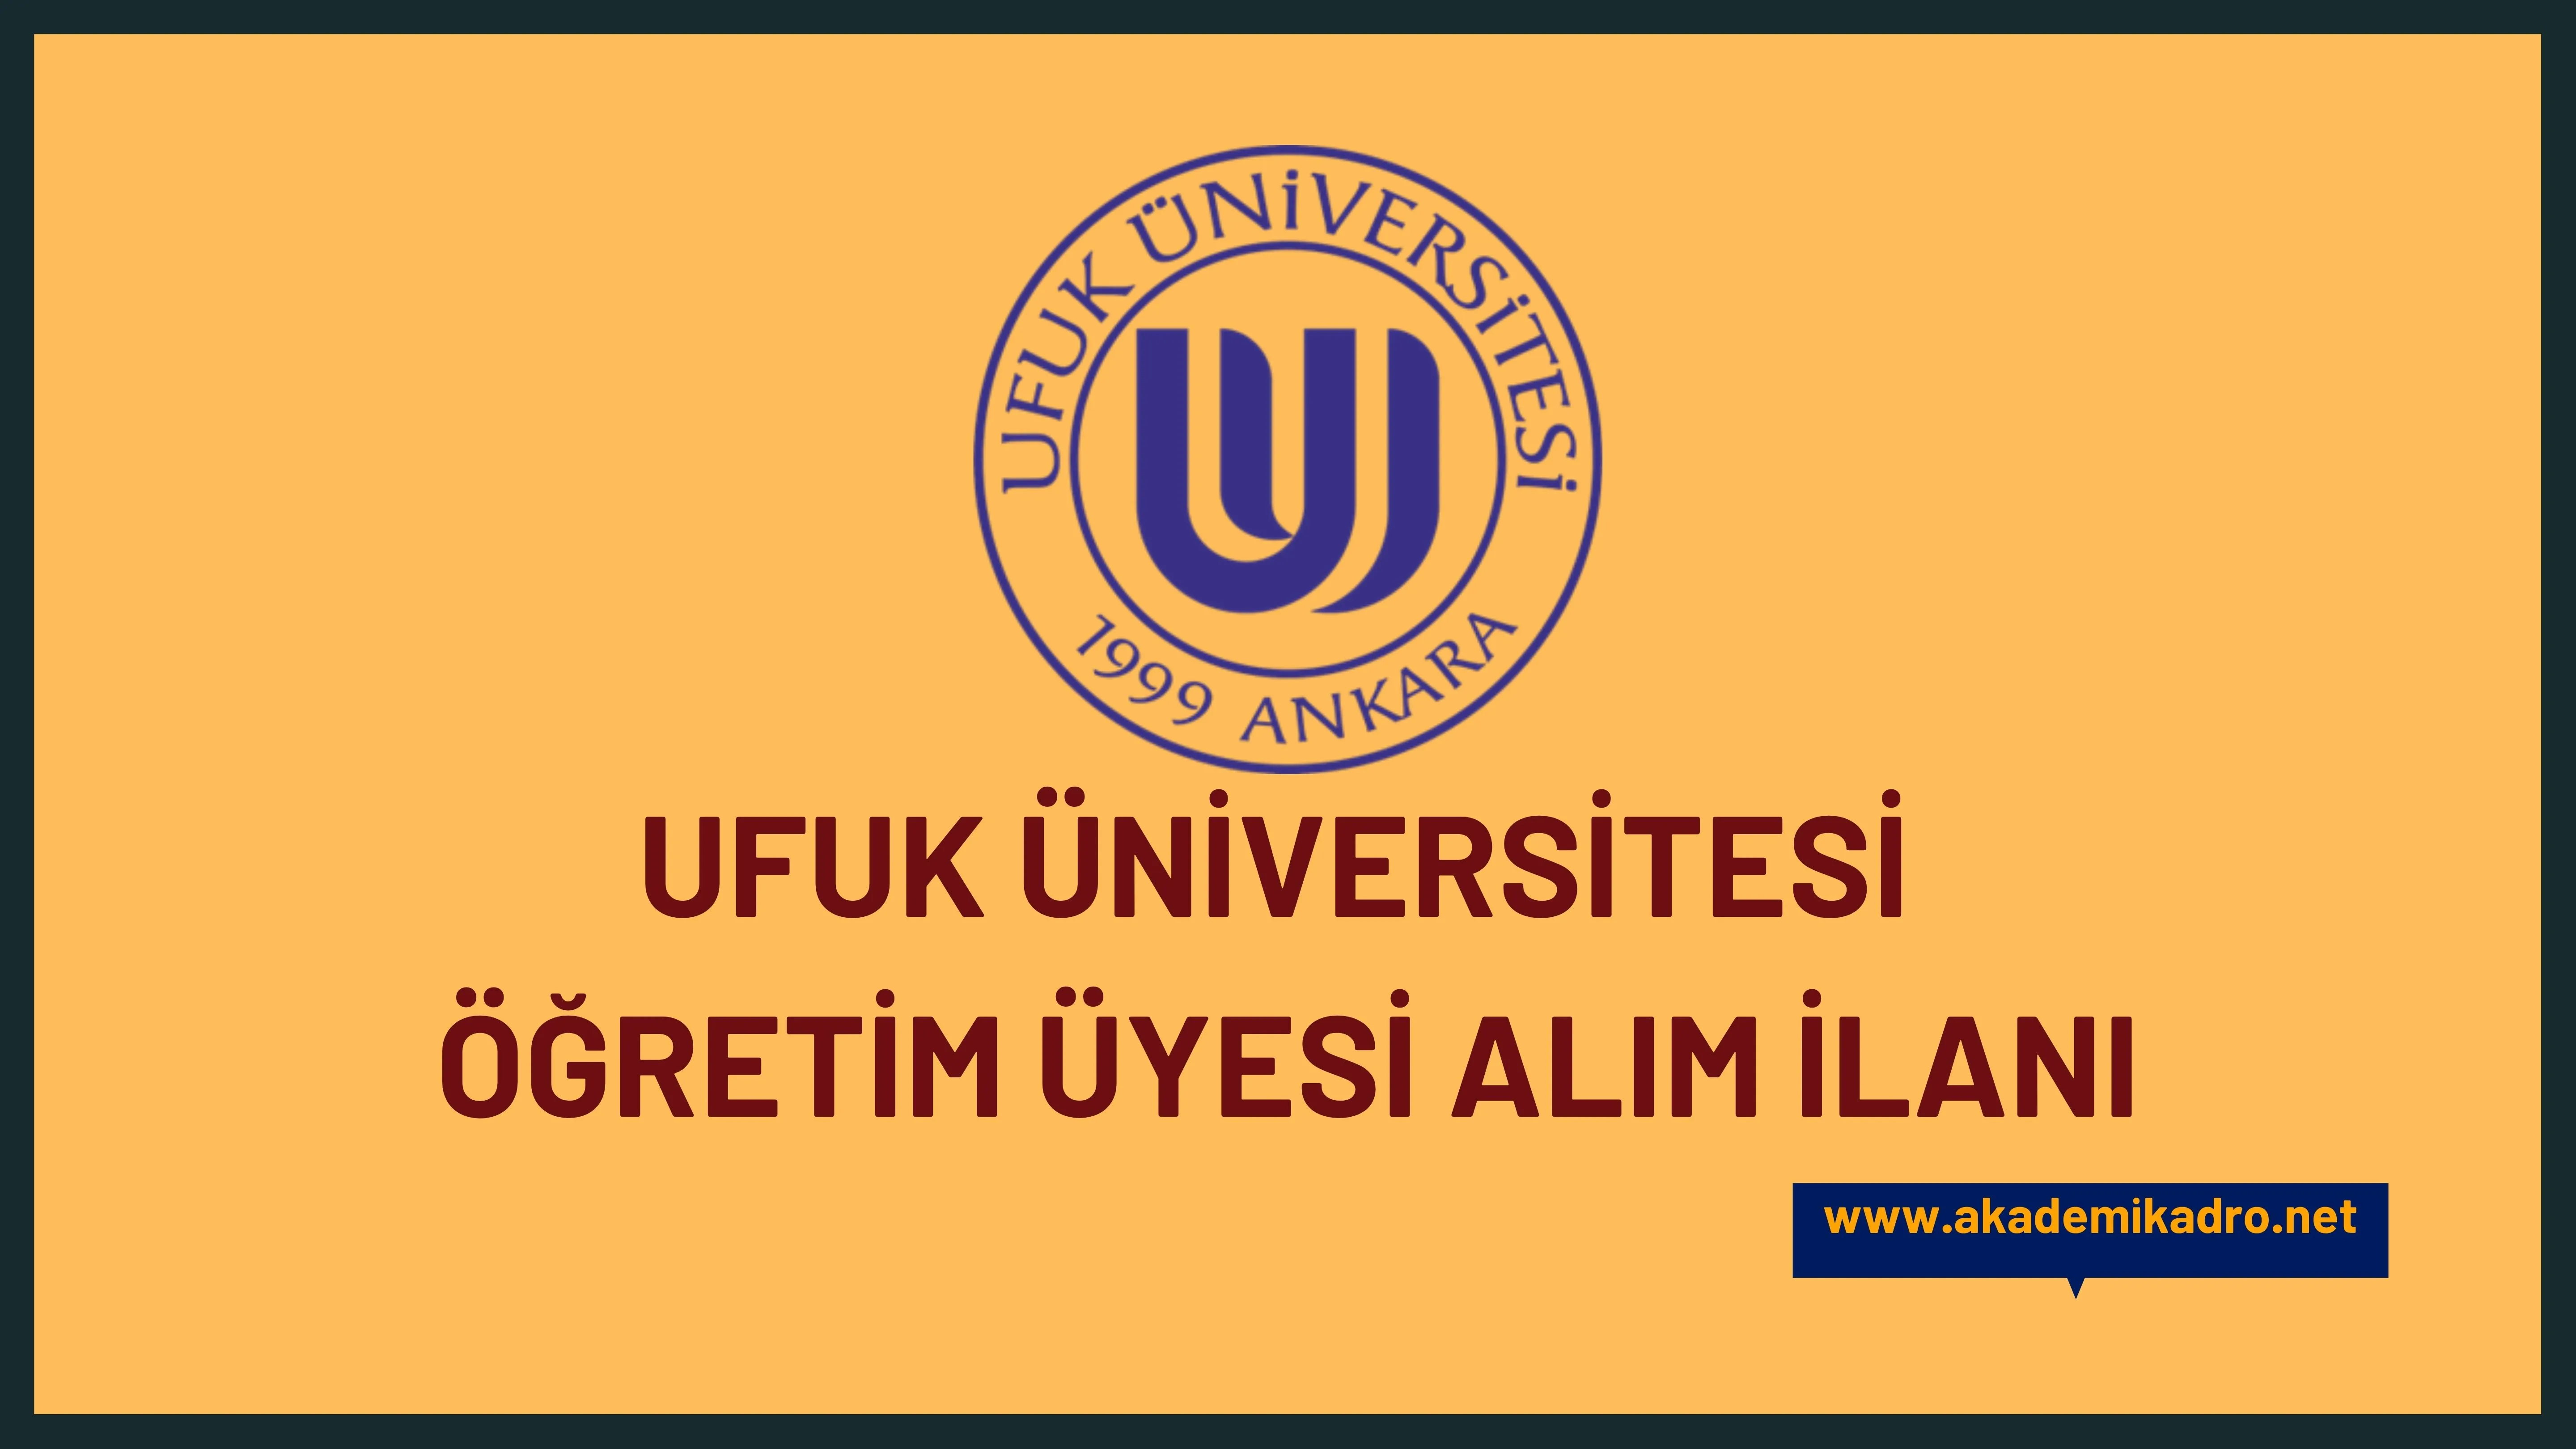 Ufuk Üniversitesi 2 akademik personel alacak